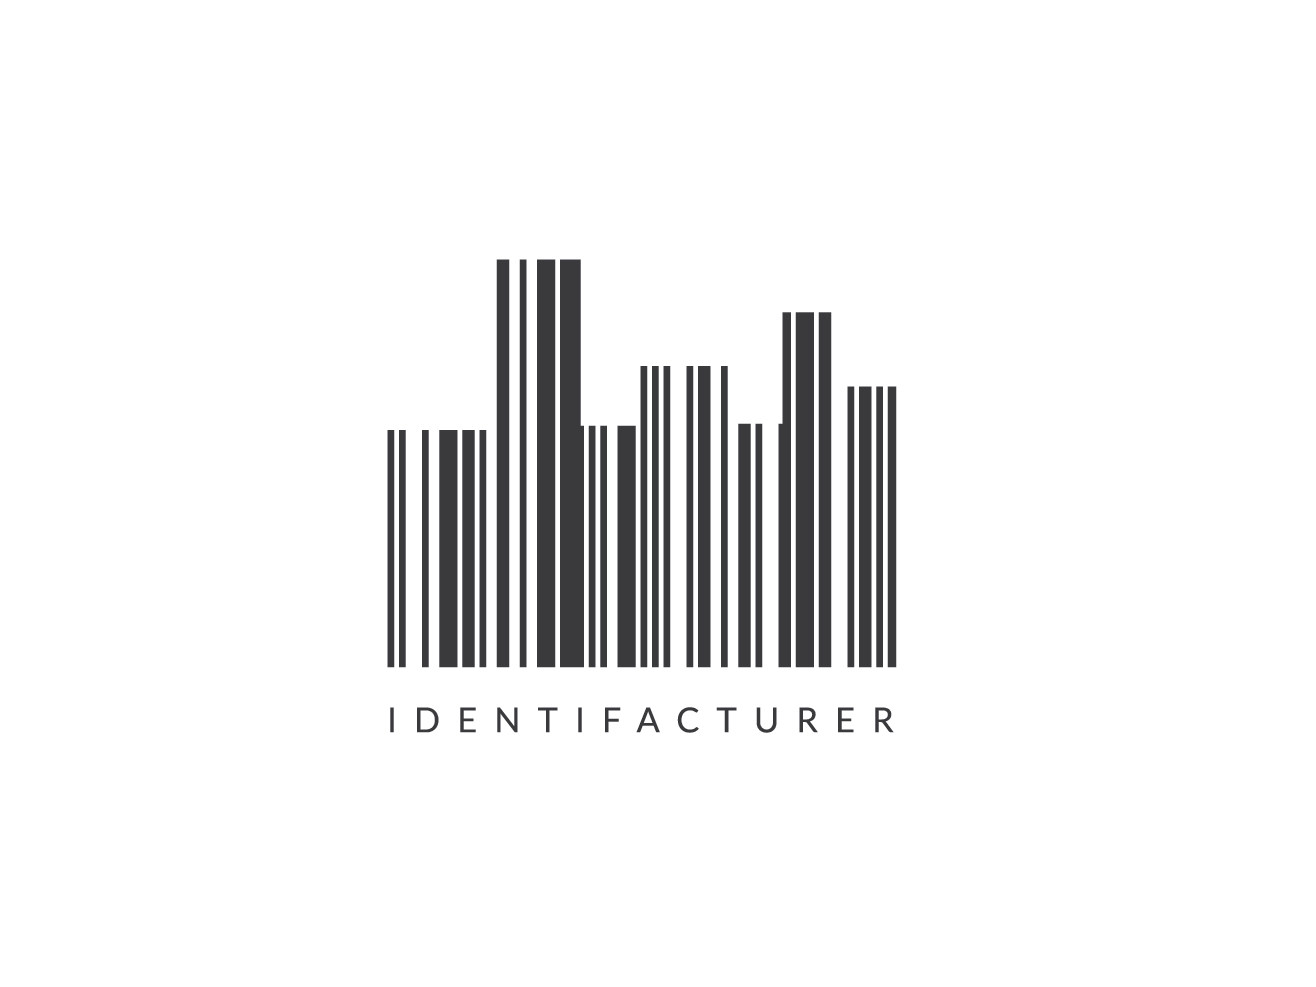 Barcode Logo - Identifacturer Logo Concept by Muhammad Armash Khalid on Dribbble